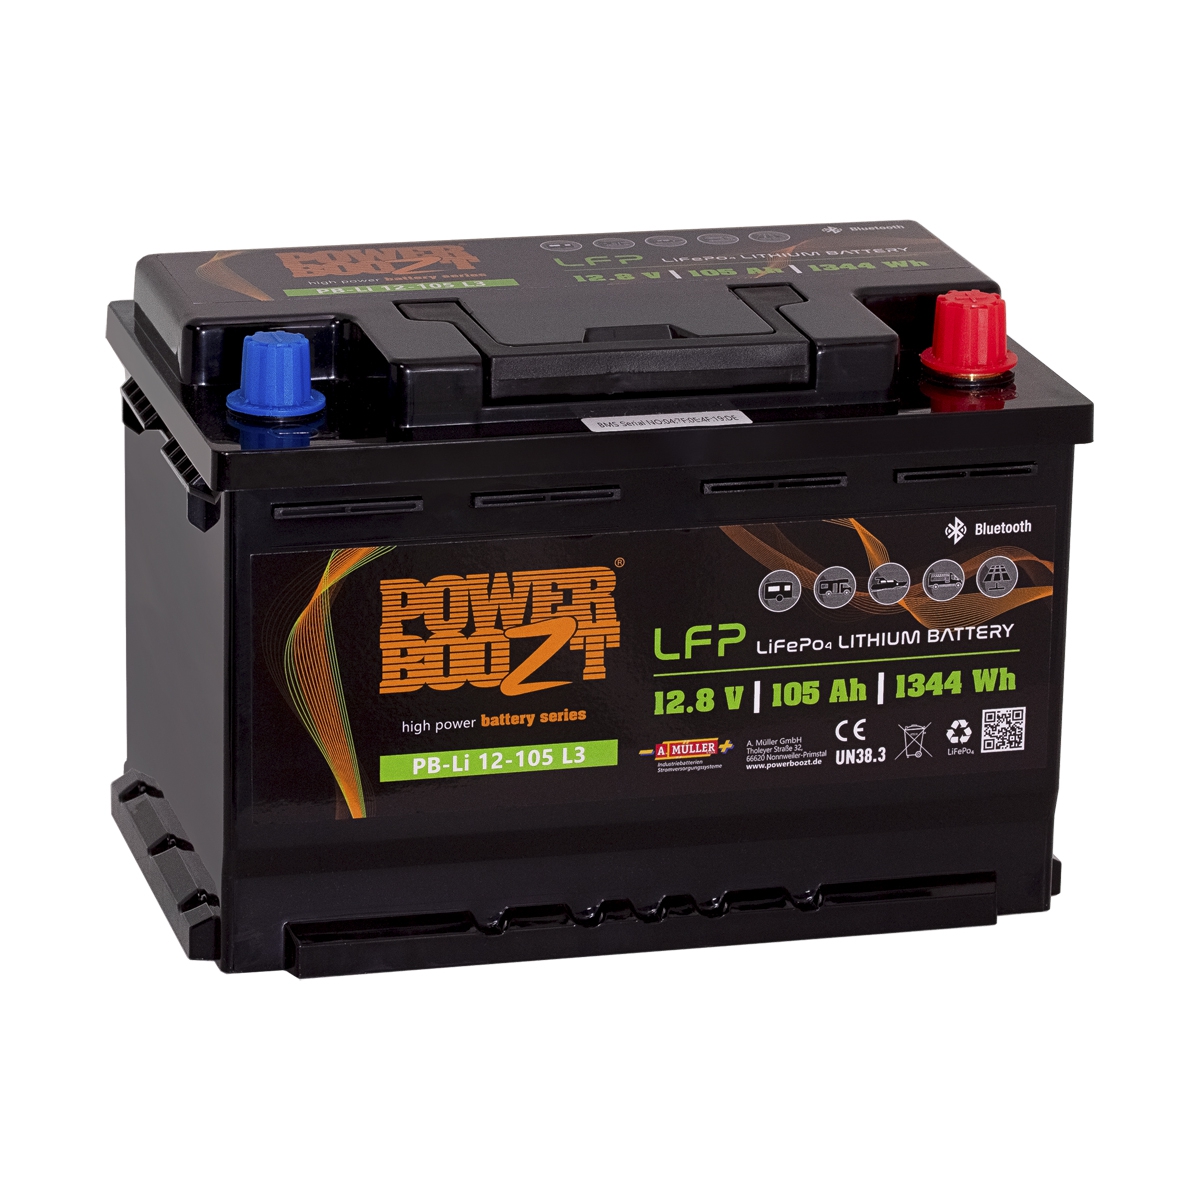 POWERBOOZT Lithium-Batterie PB-Li 12-105 L3 104070